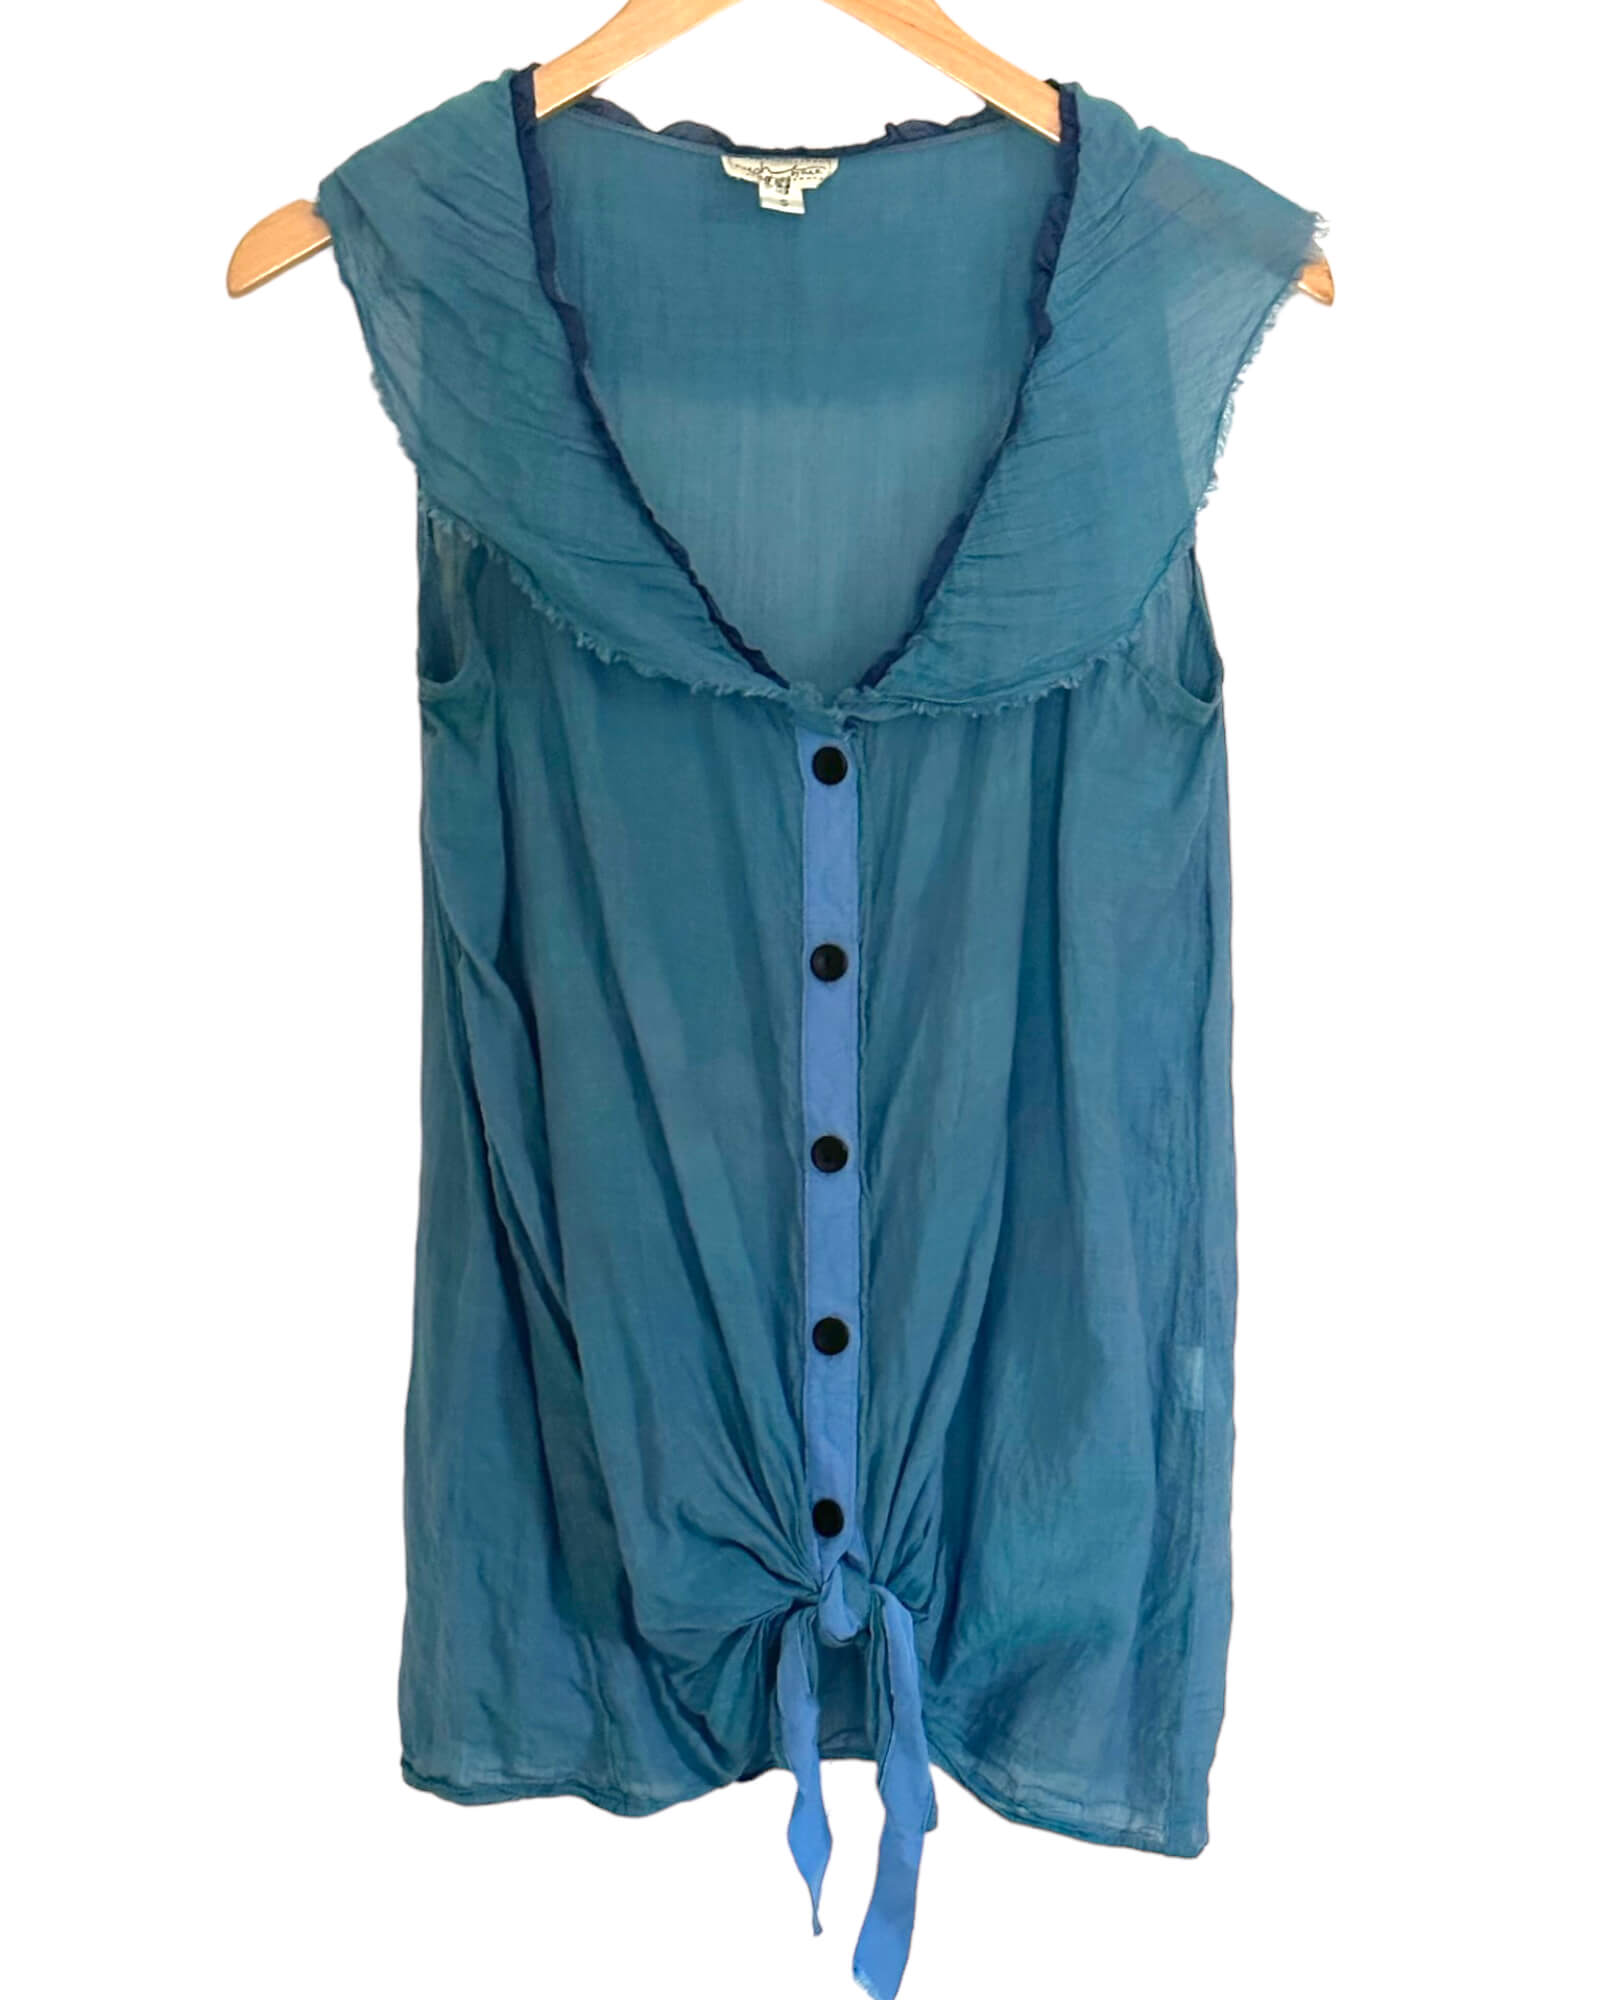 Soft Summer NEESH by D.A.R ANTHROPOLOGIE folk blue sleeveless tie-front top